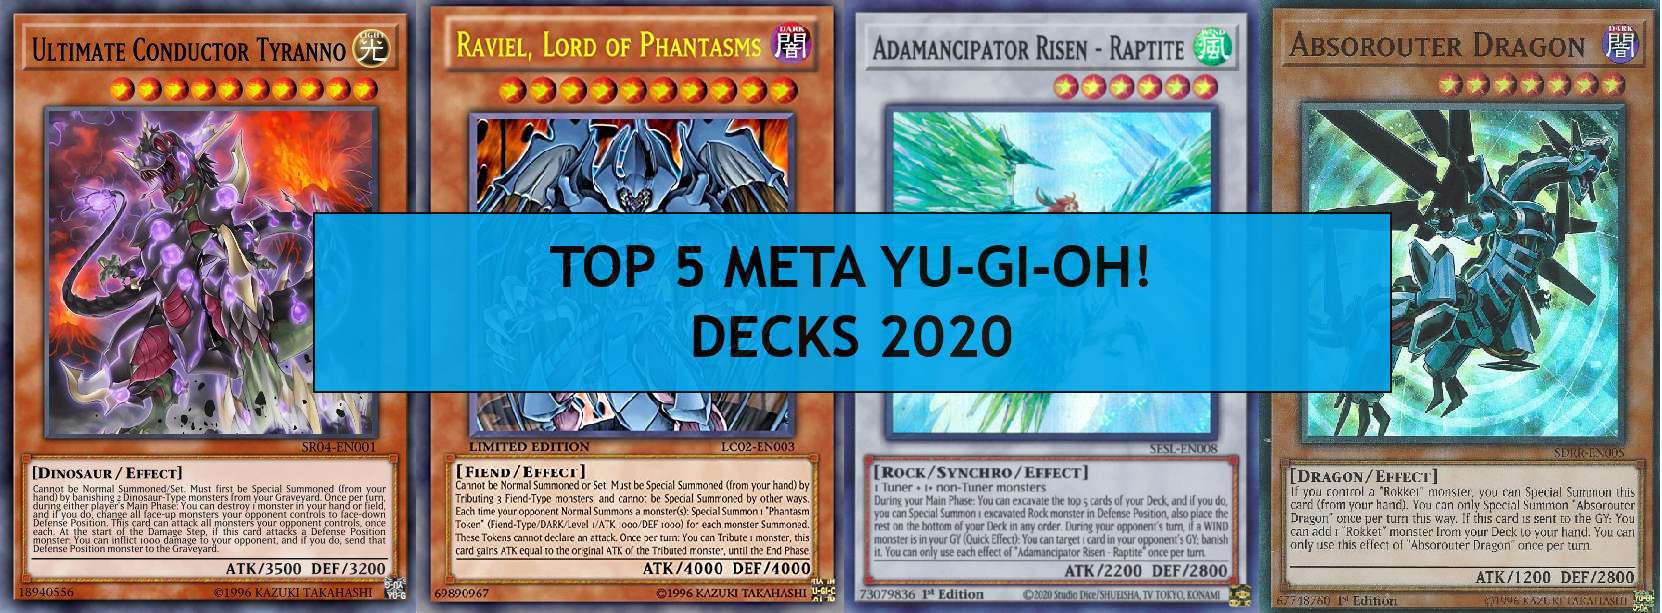 TOP 5 Meta YuGiOh! Decks 2020 Card lists